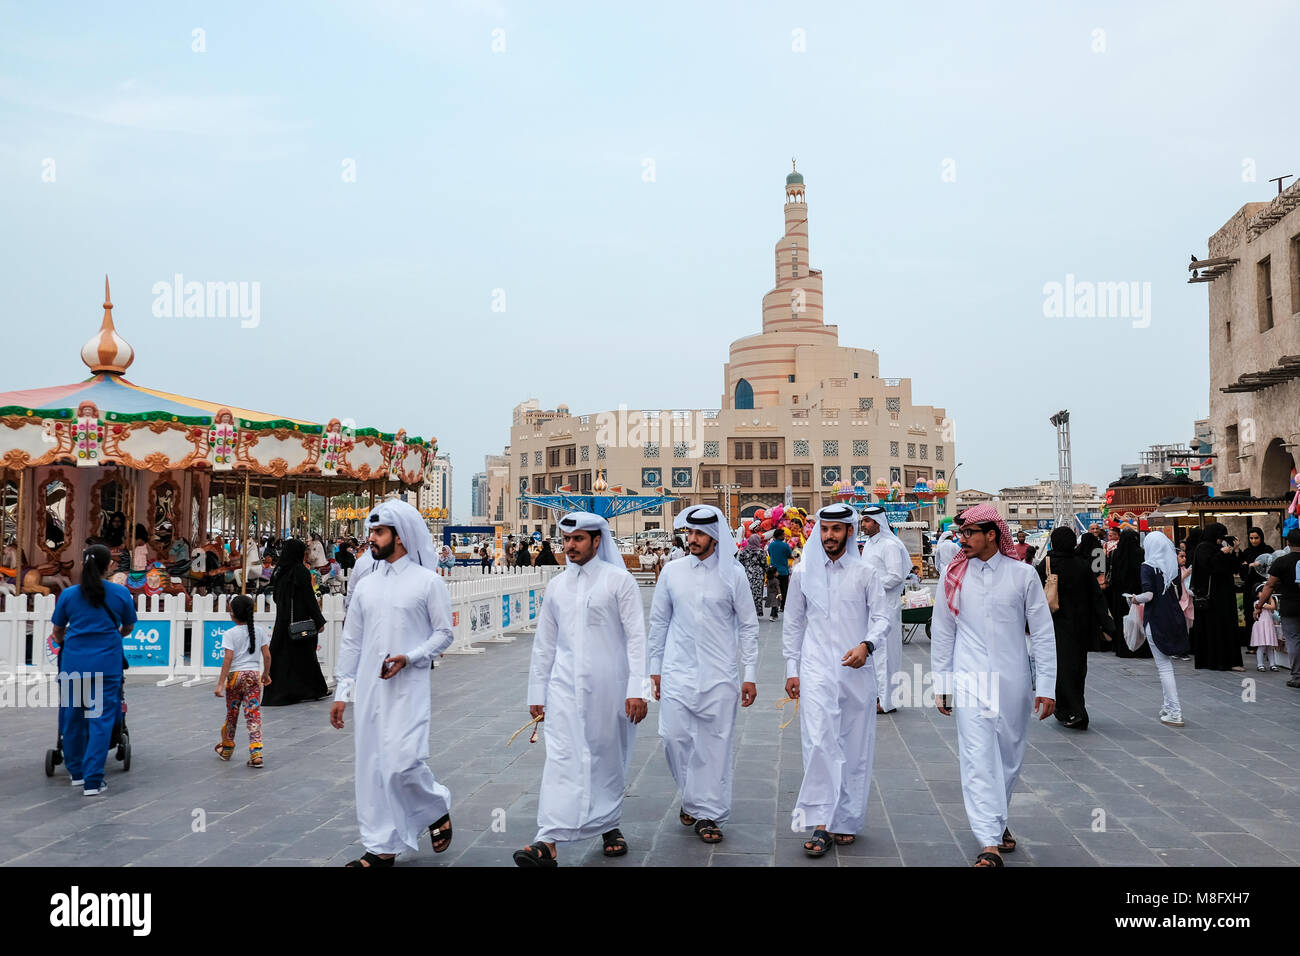 Young Qatari men dressed in traditional thobes walk through Souq Waqif, Doha capital of Qatar Stock Photo